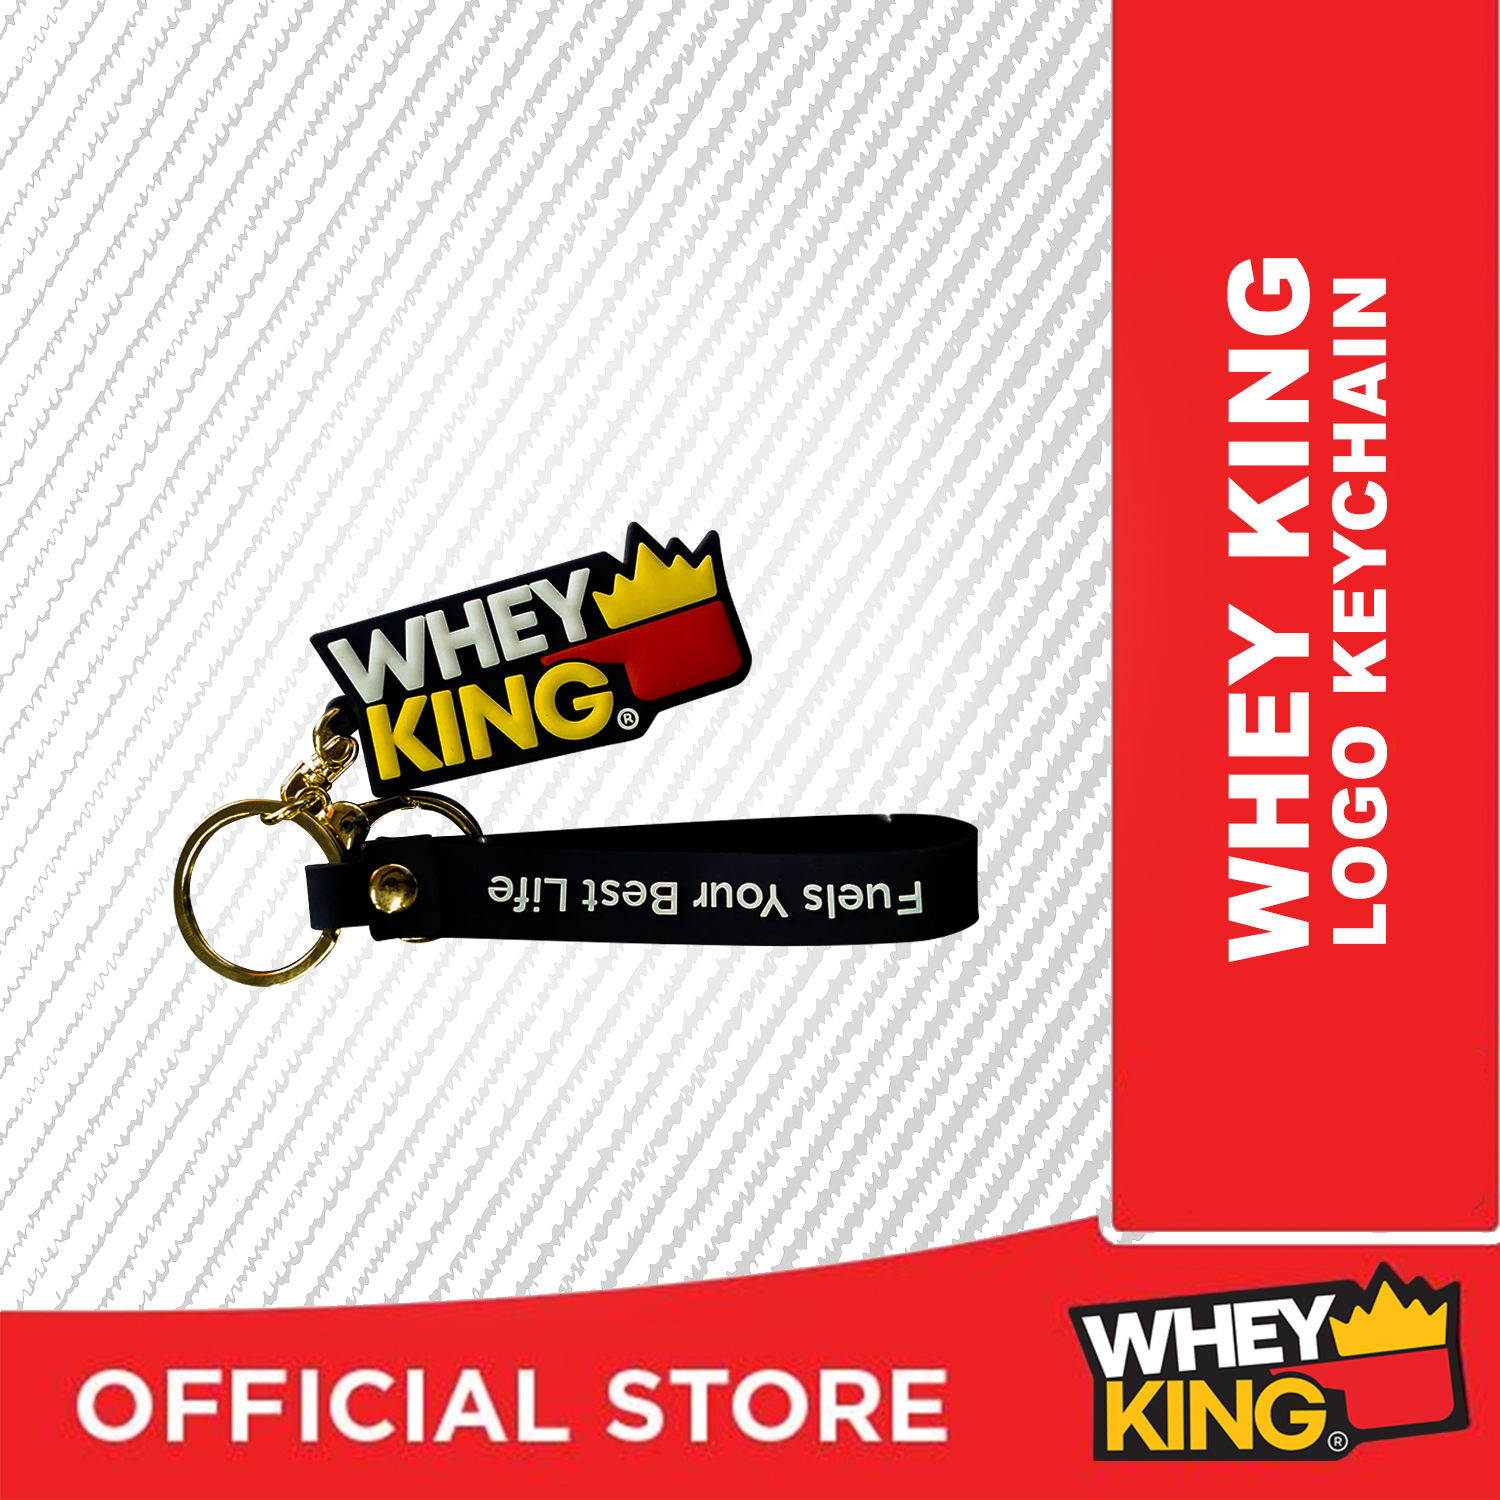 Whey King Logo Keychain